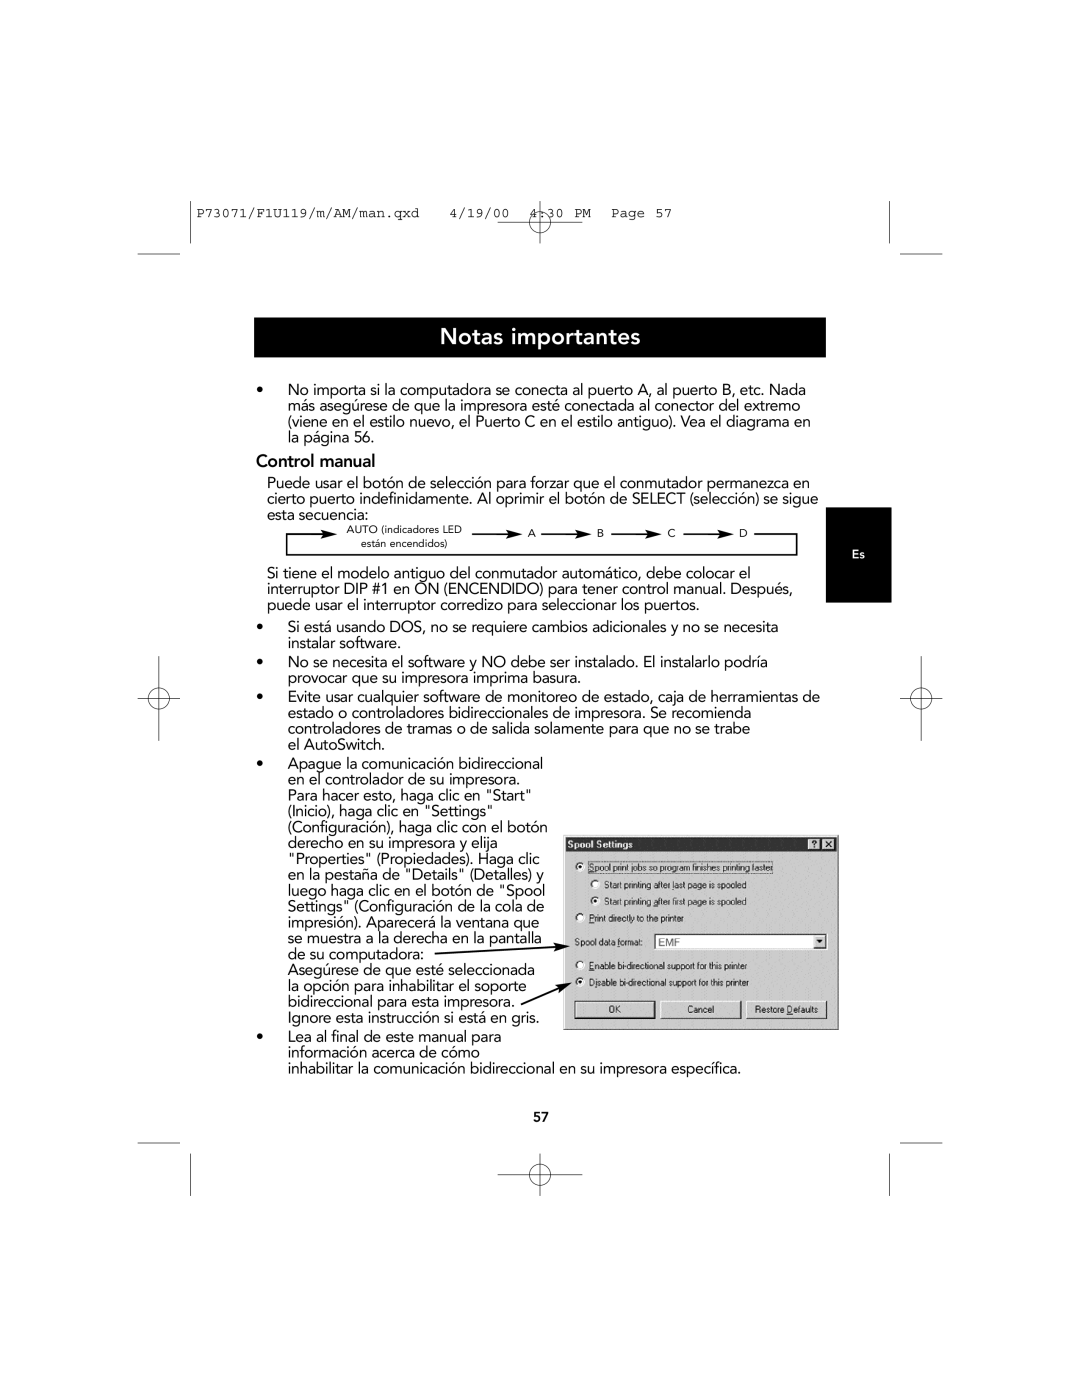 Belkin F1U119 user manual Notas importantes, Control manual 